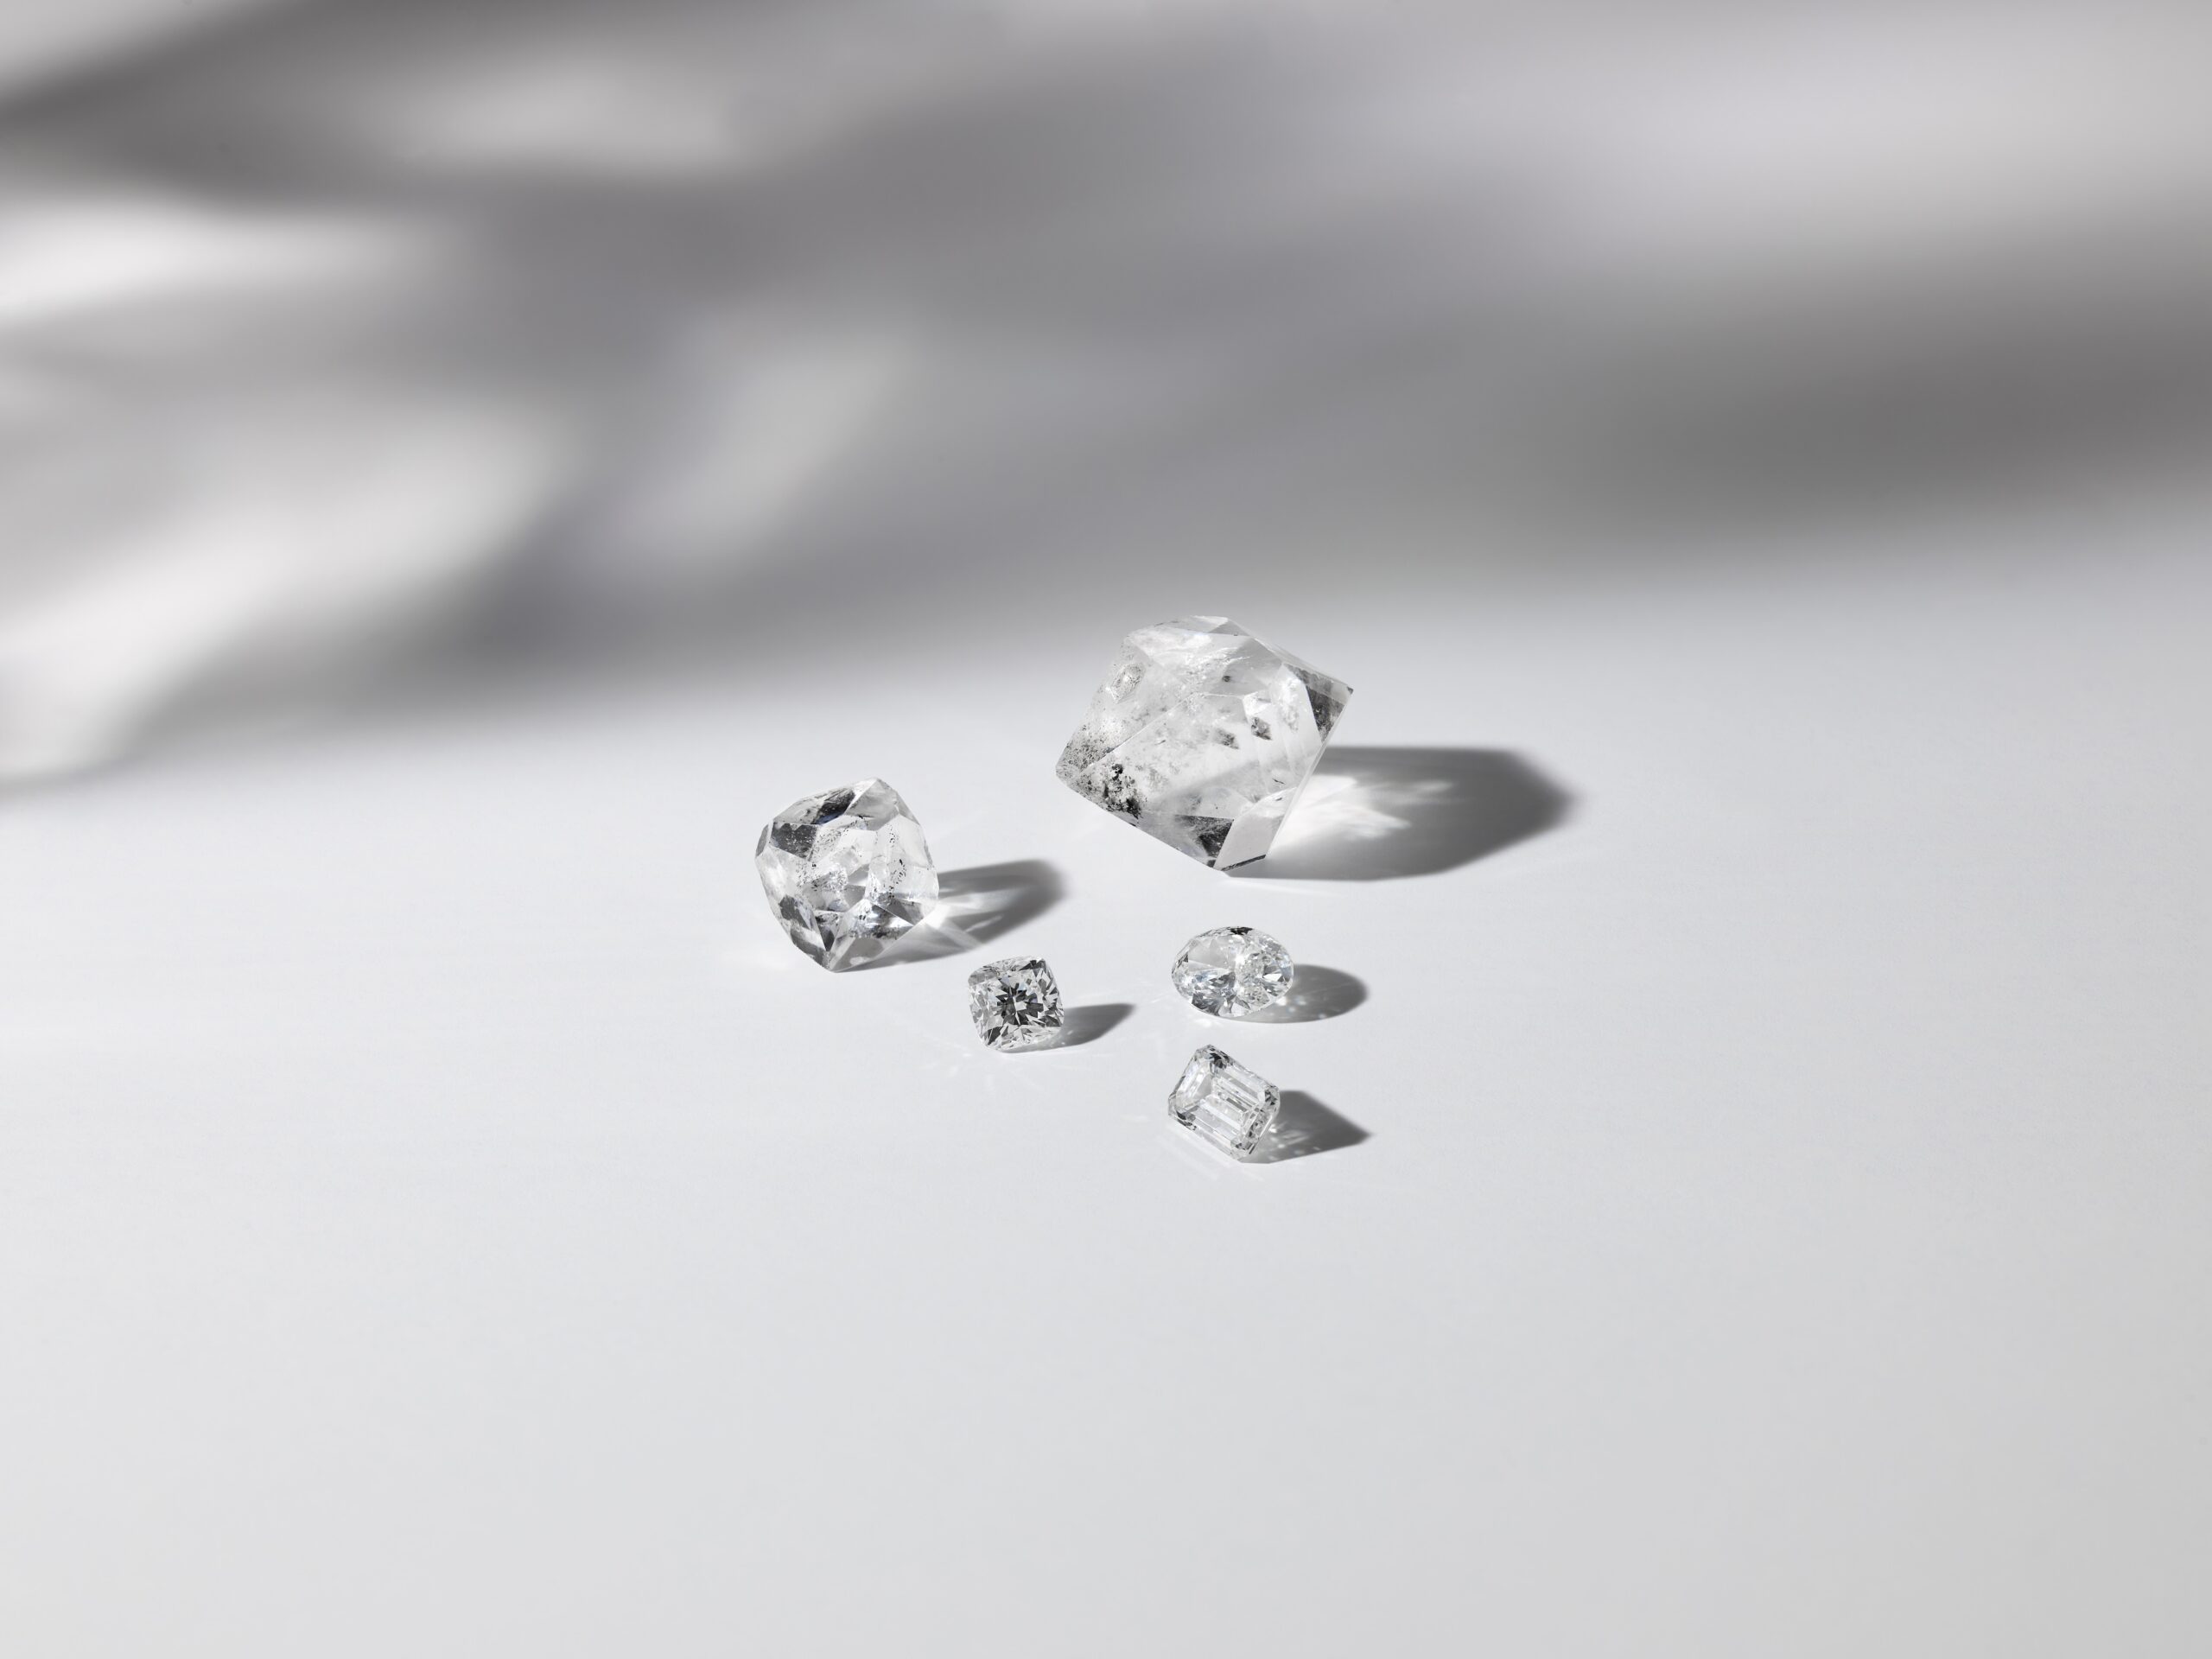 image of rough diamonds and three cut diamonds: emerald cut, oval cut, and cushion cut